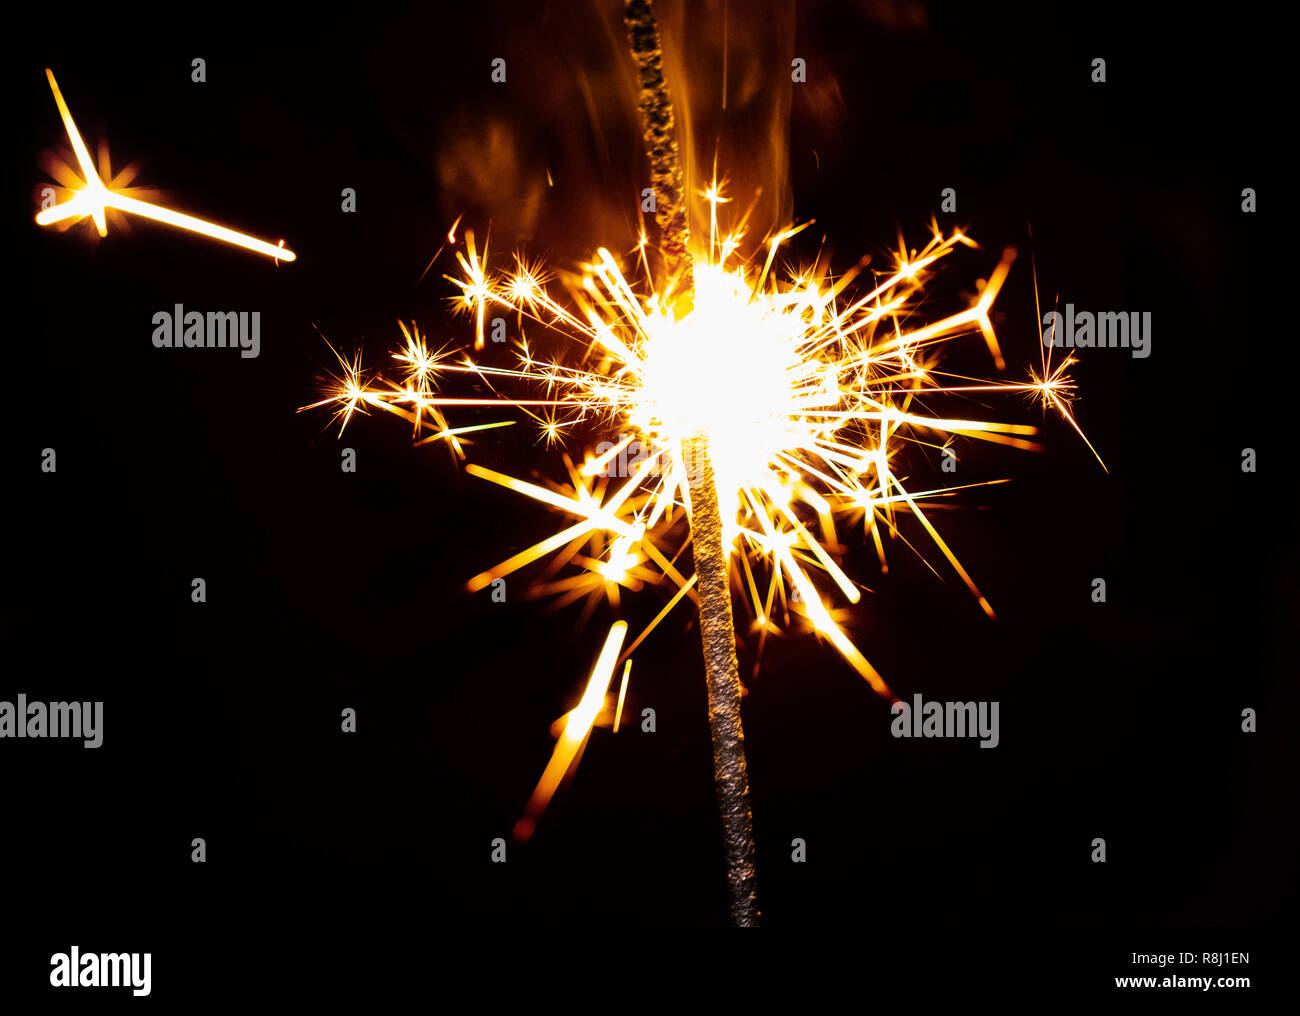 burning sparkler close-up on a black background Stock Photo